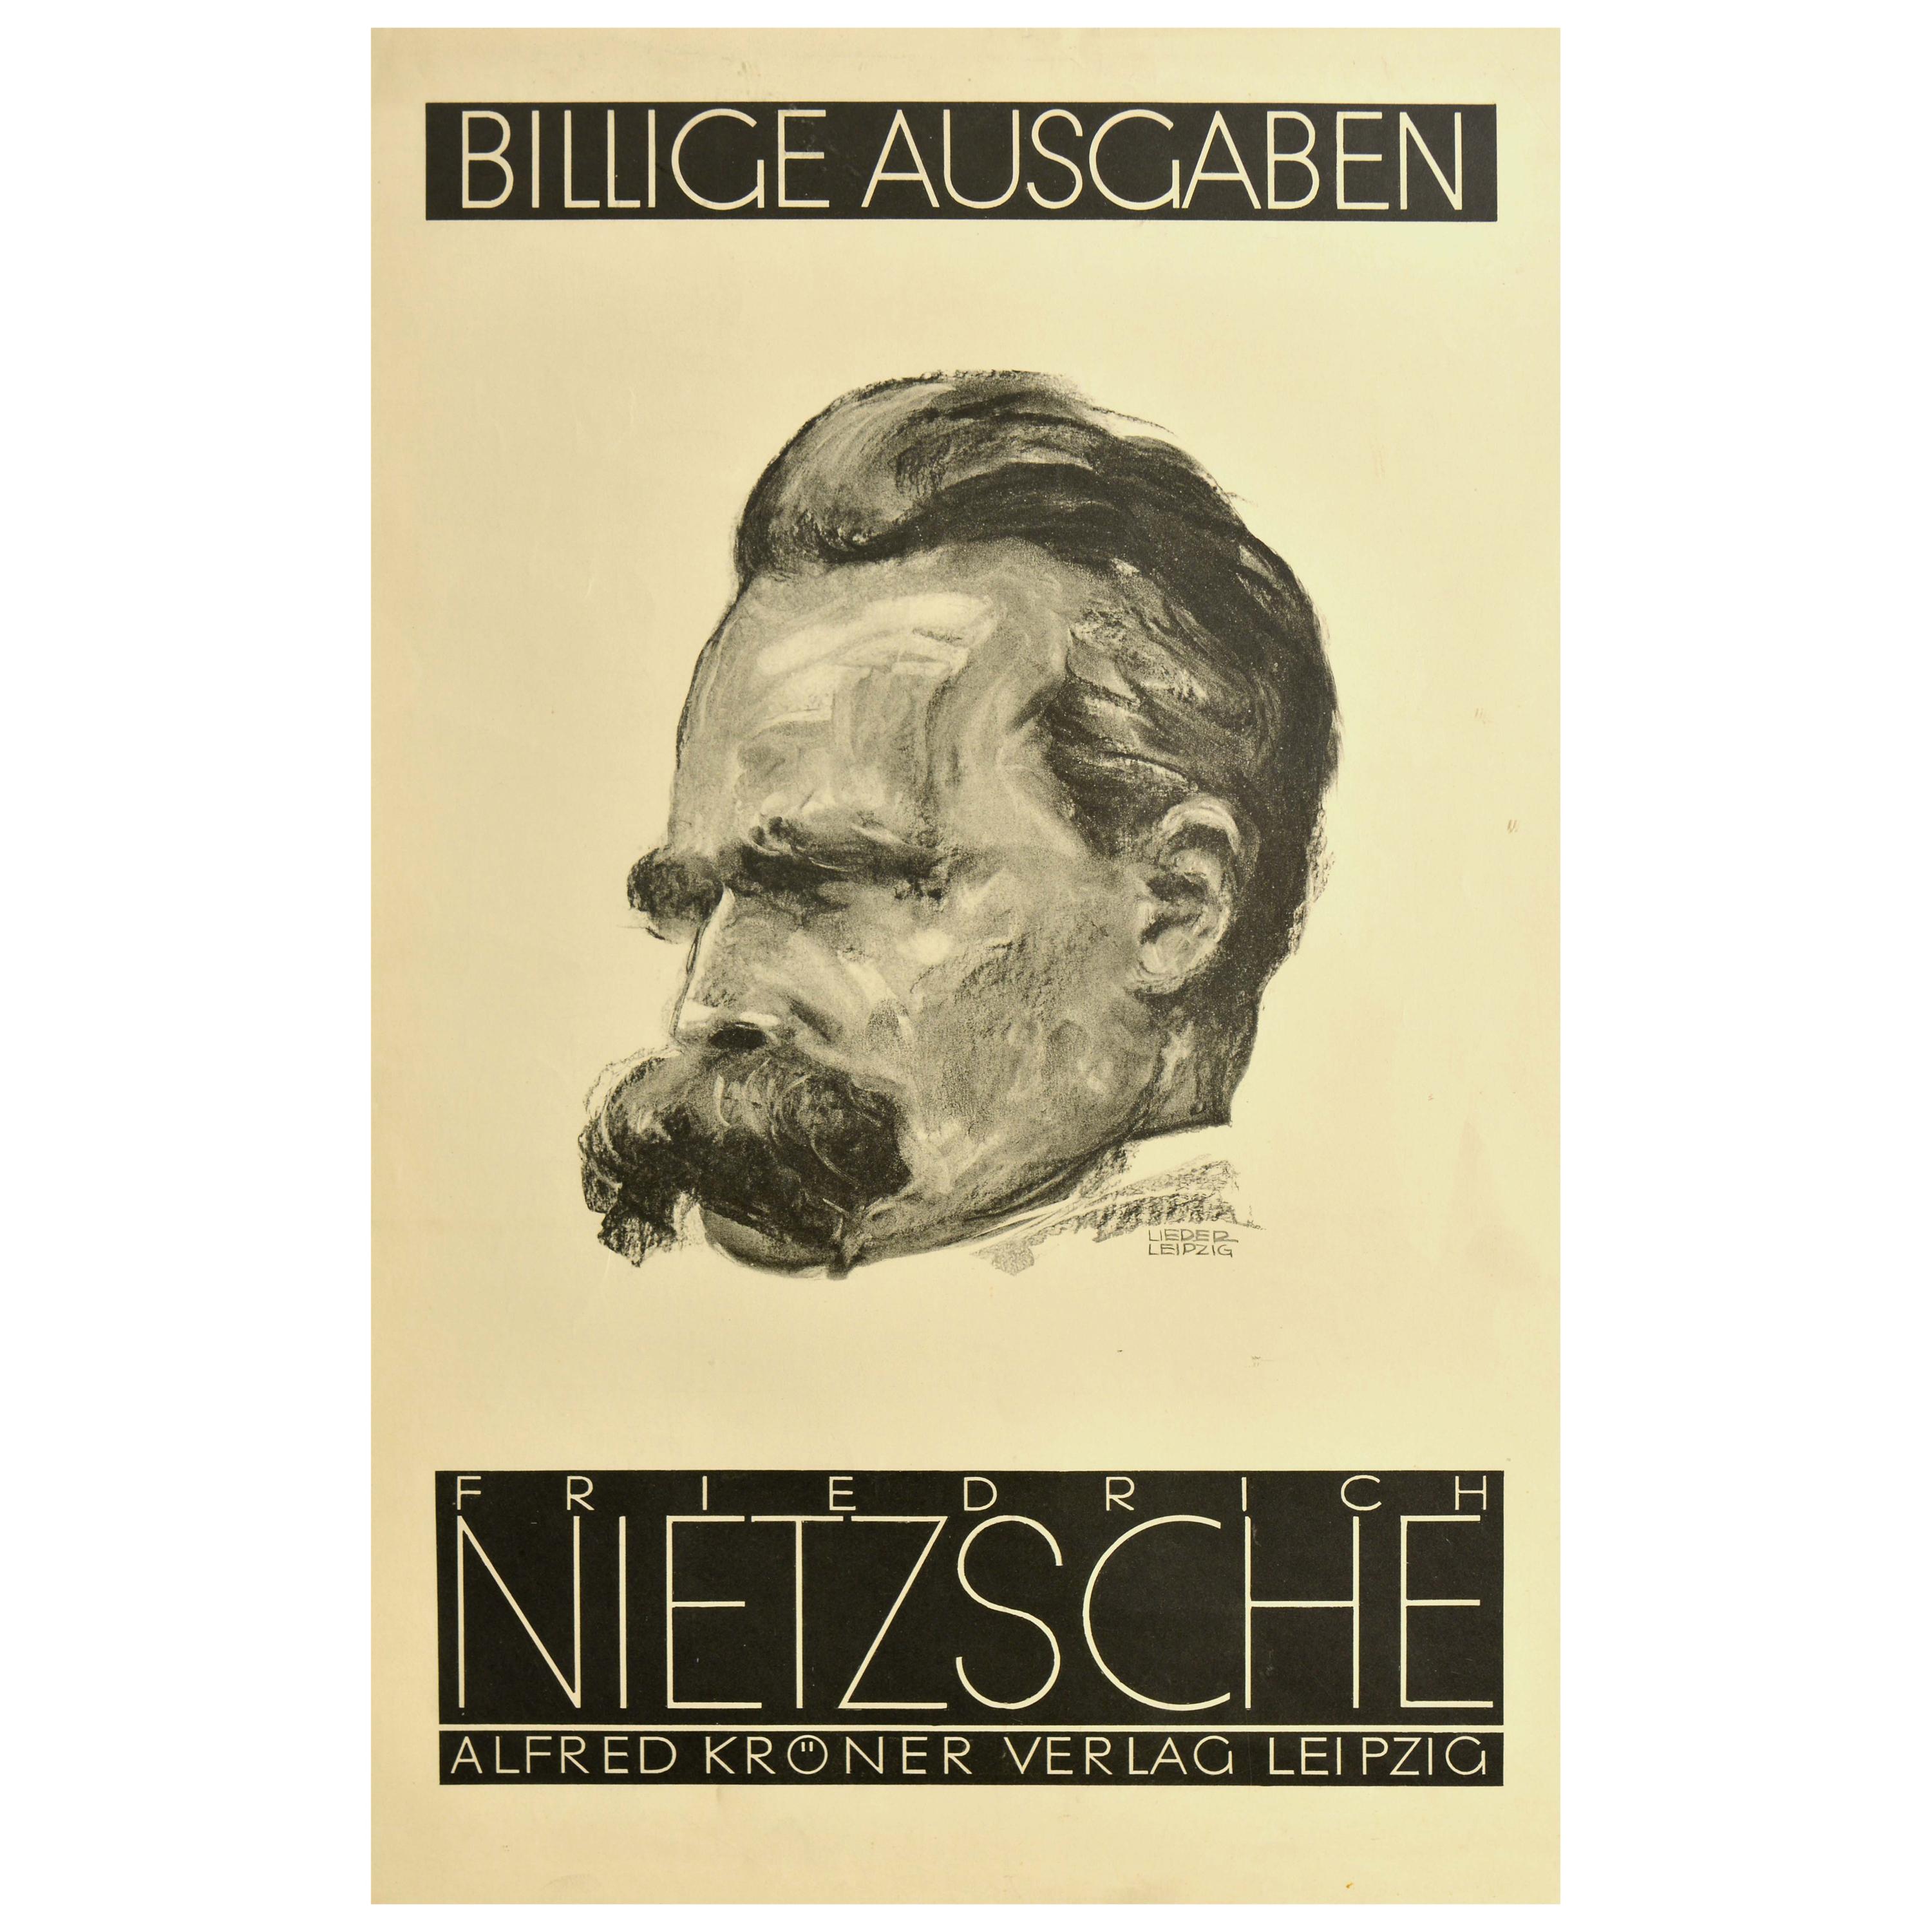 Original Vintage Poster Friedrich Nietzsche Book Editions Art Deco Alfred Kroner